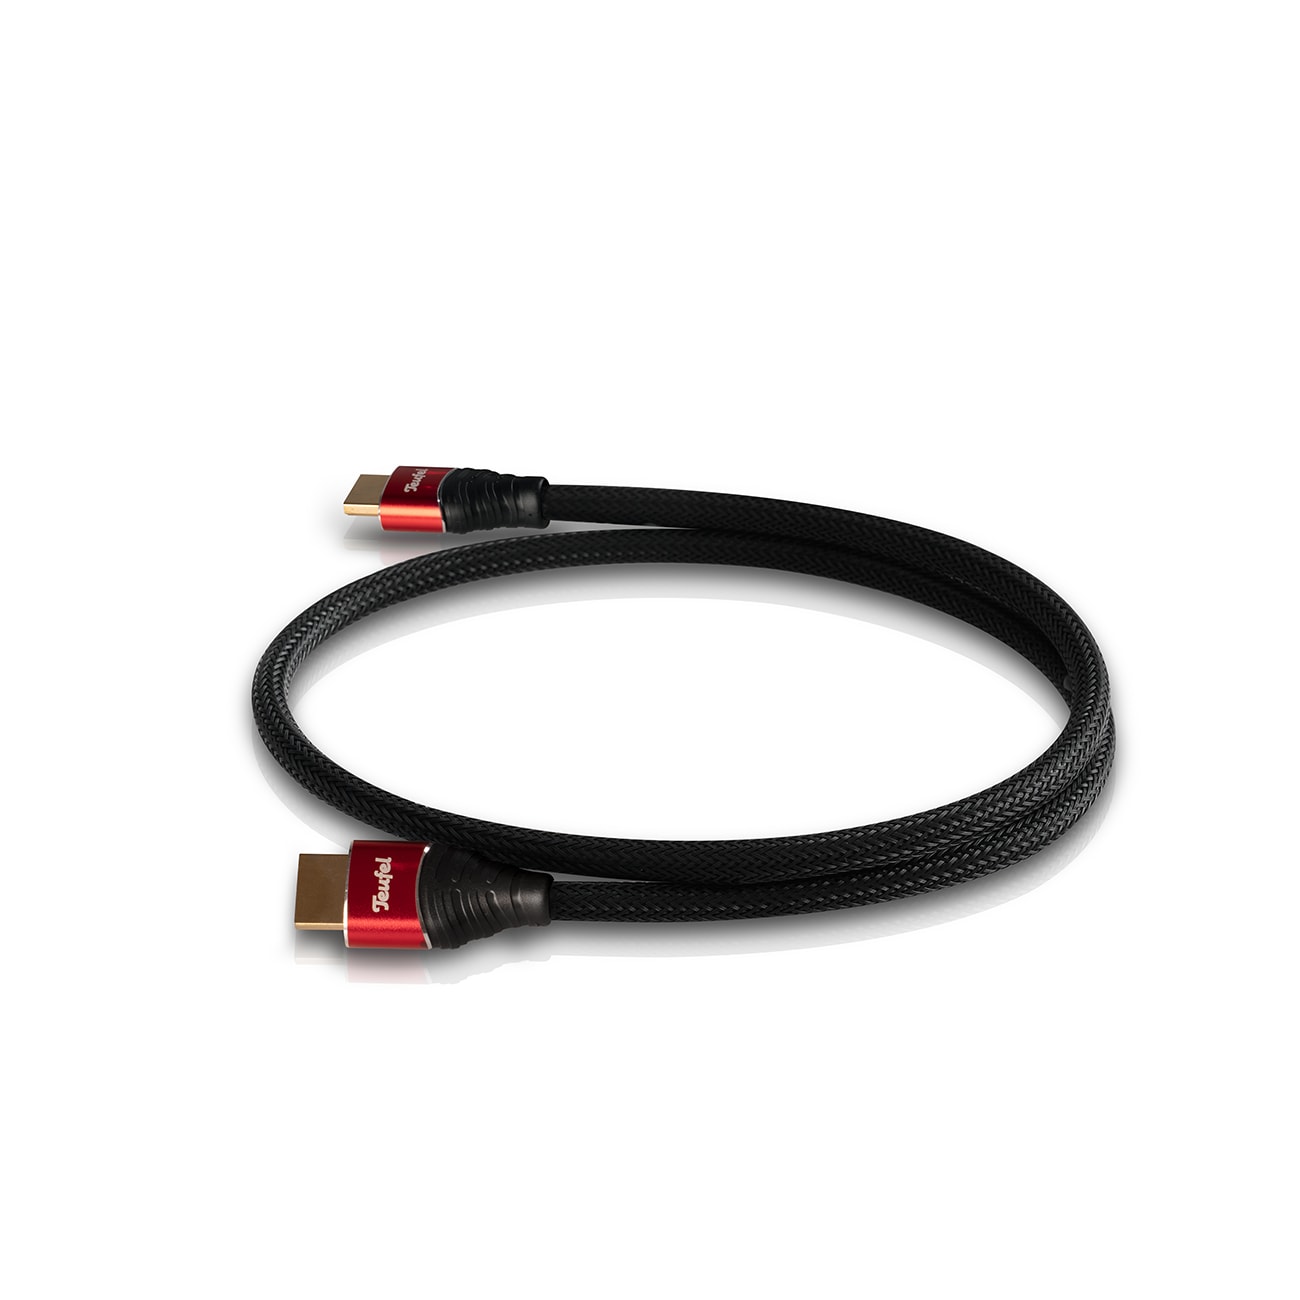 Cable HDMI-HDMI 20m-Rond